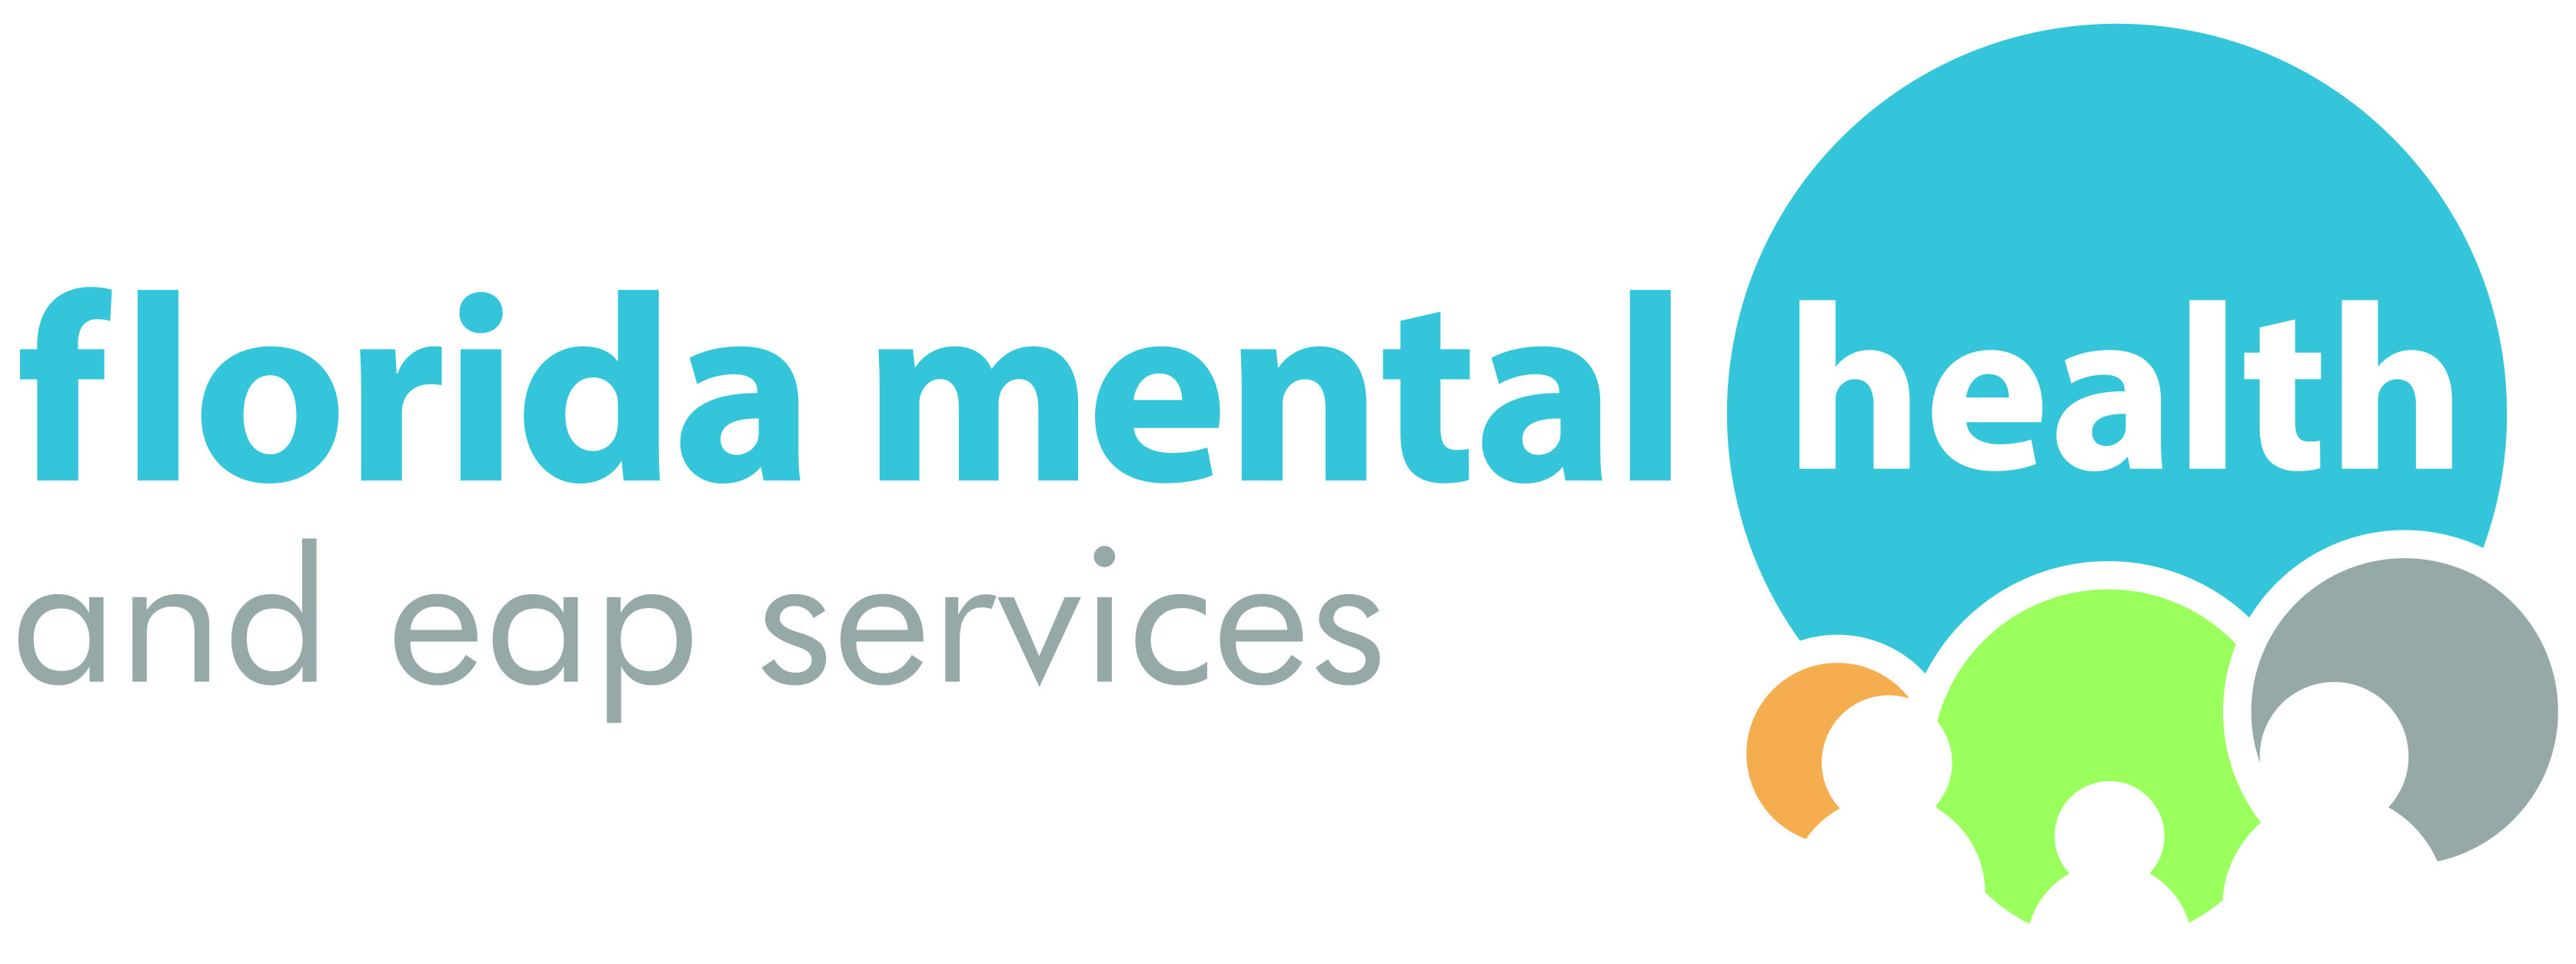 EAP Logo - Florida Mental Health & EAP Services Logo Mental Health